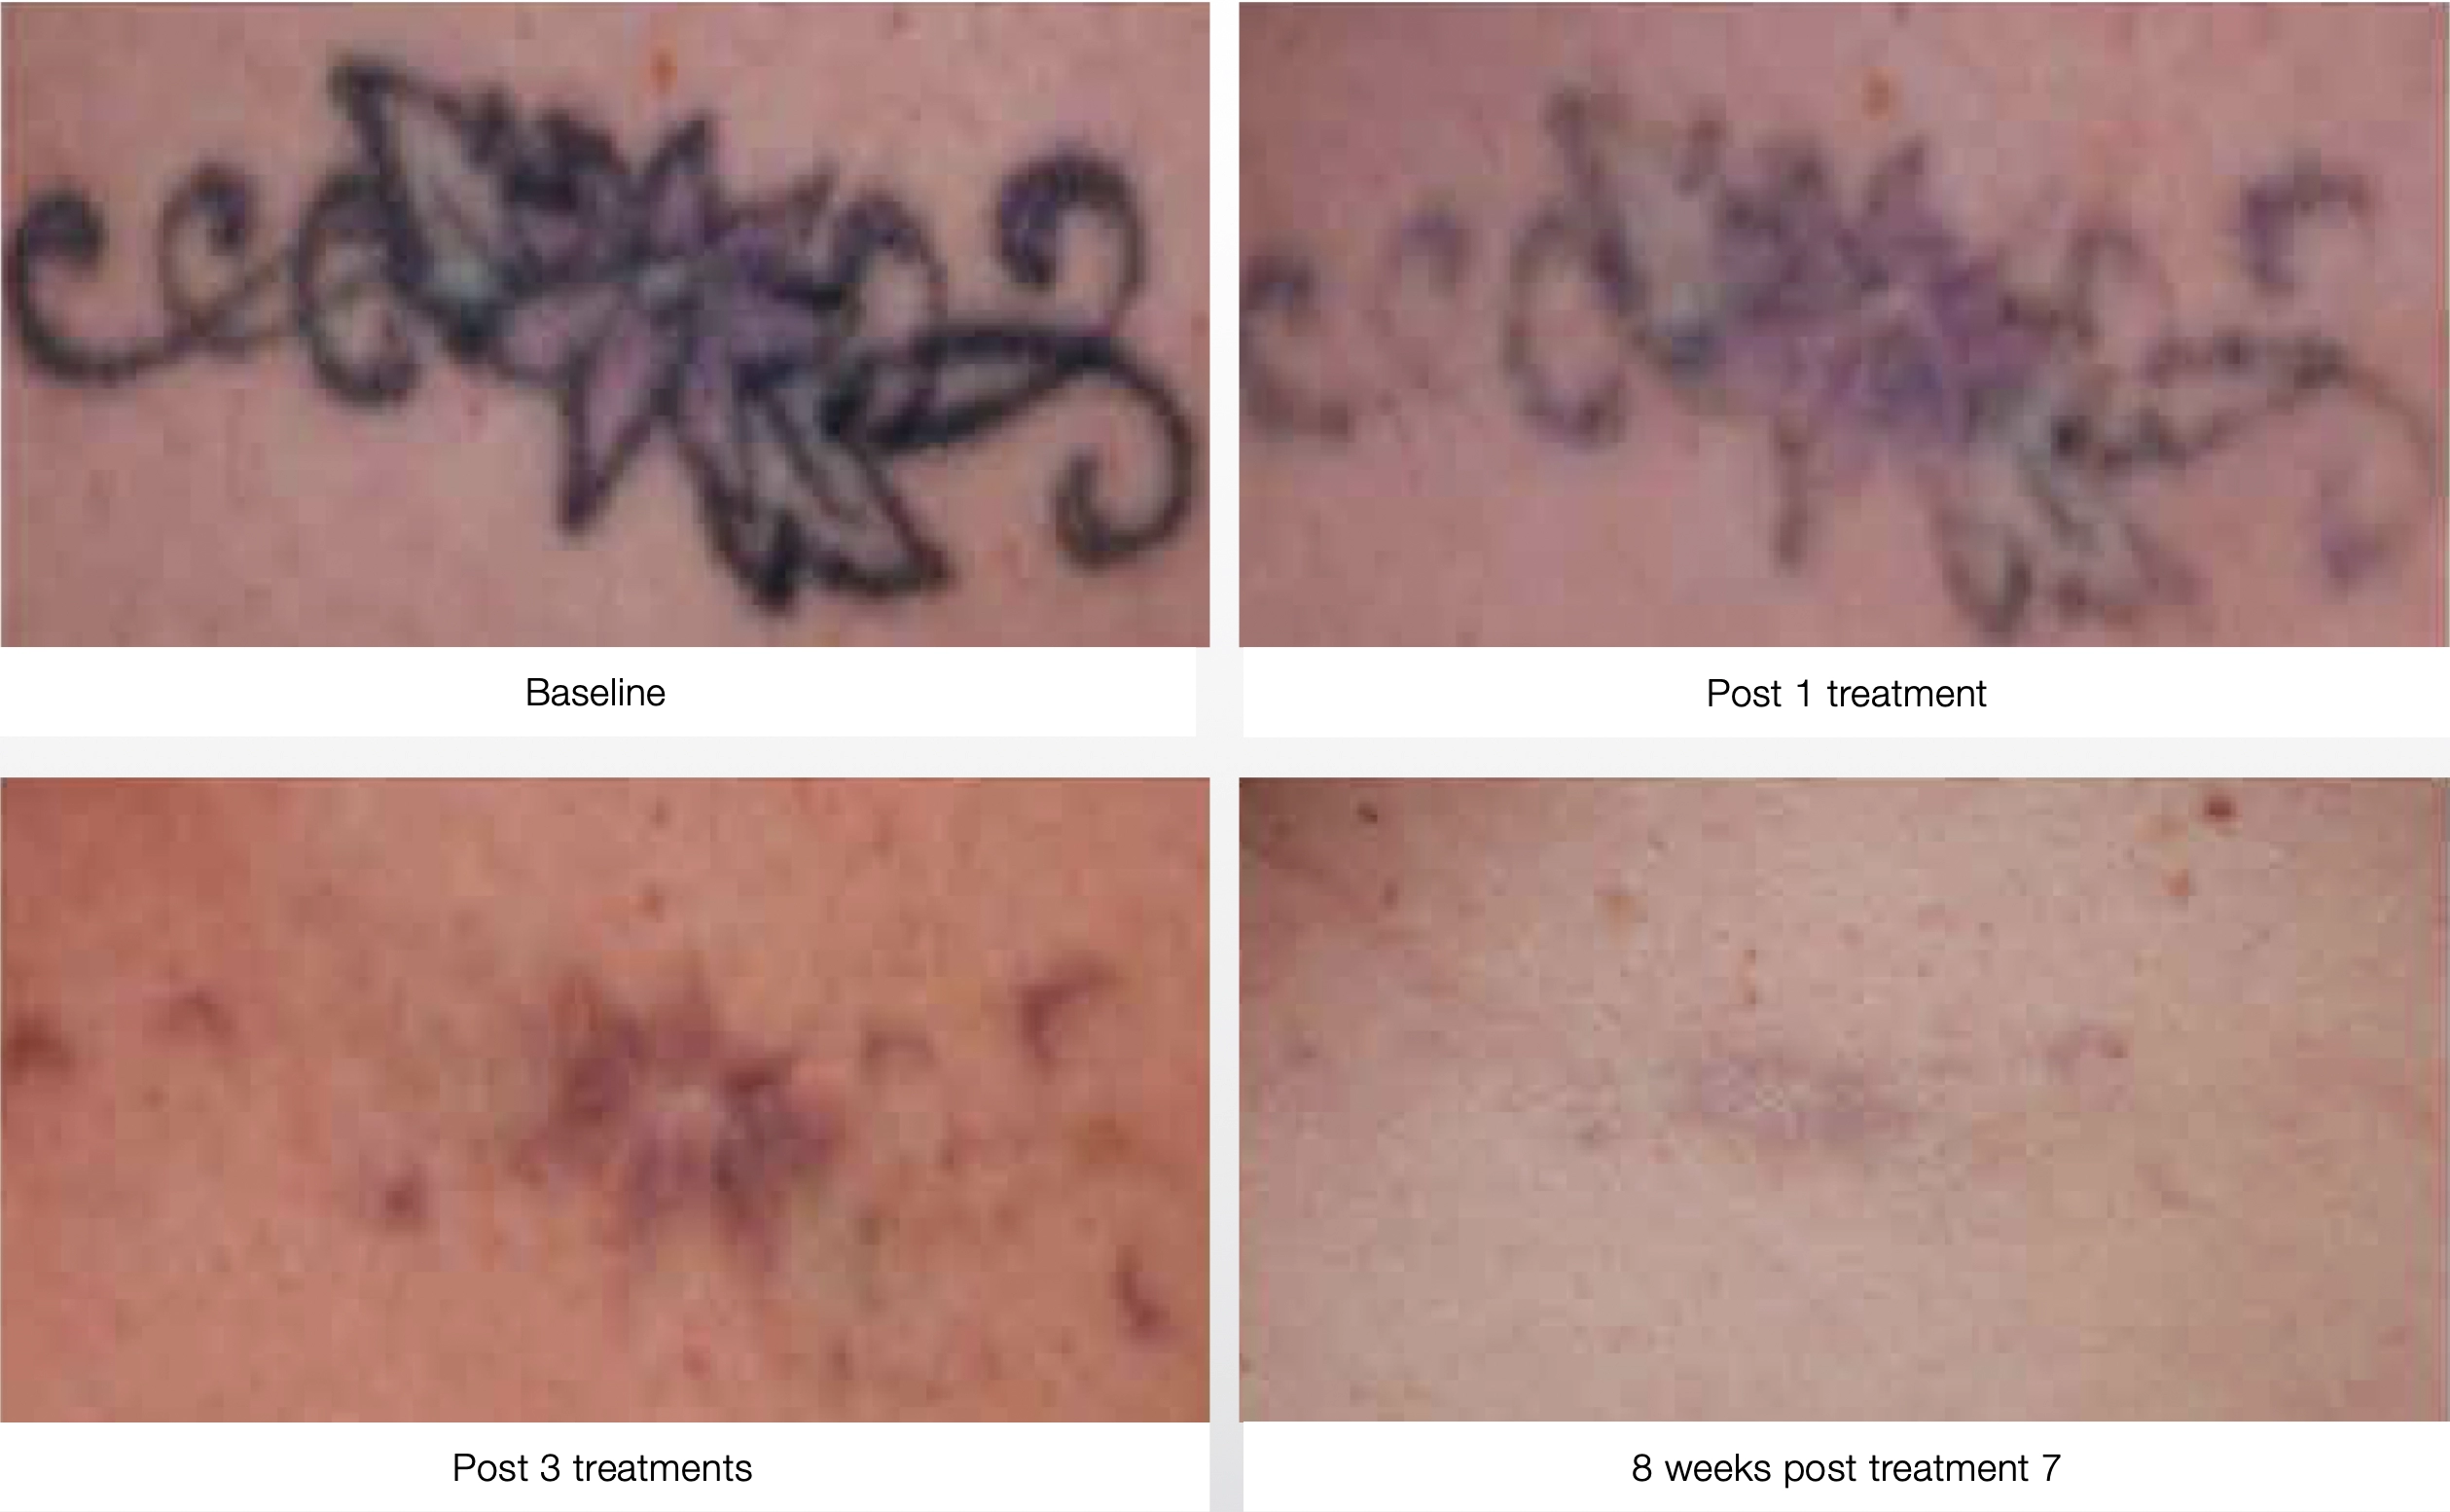 Does Laser Tattoo Removal Hurt? - Este